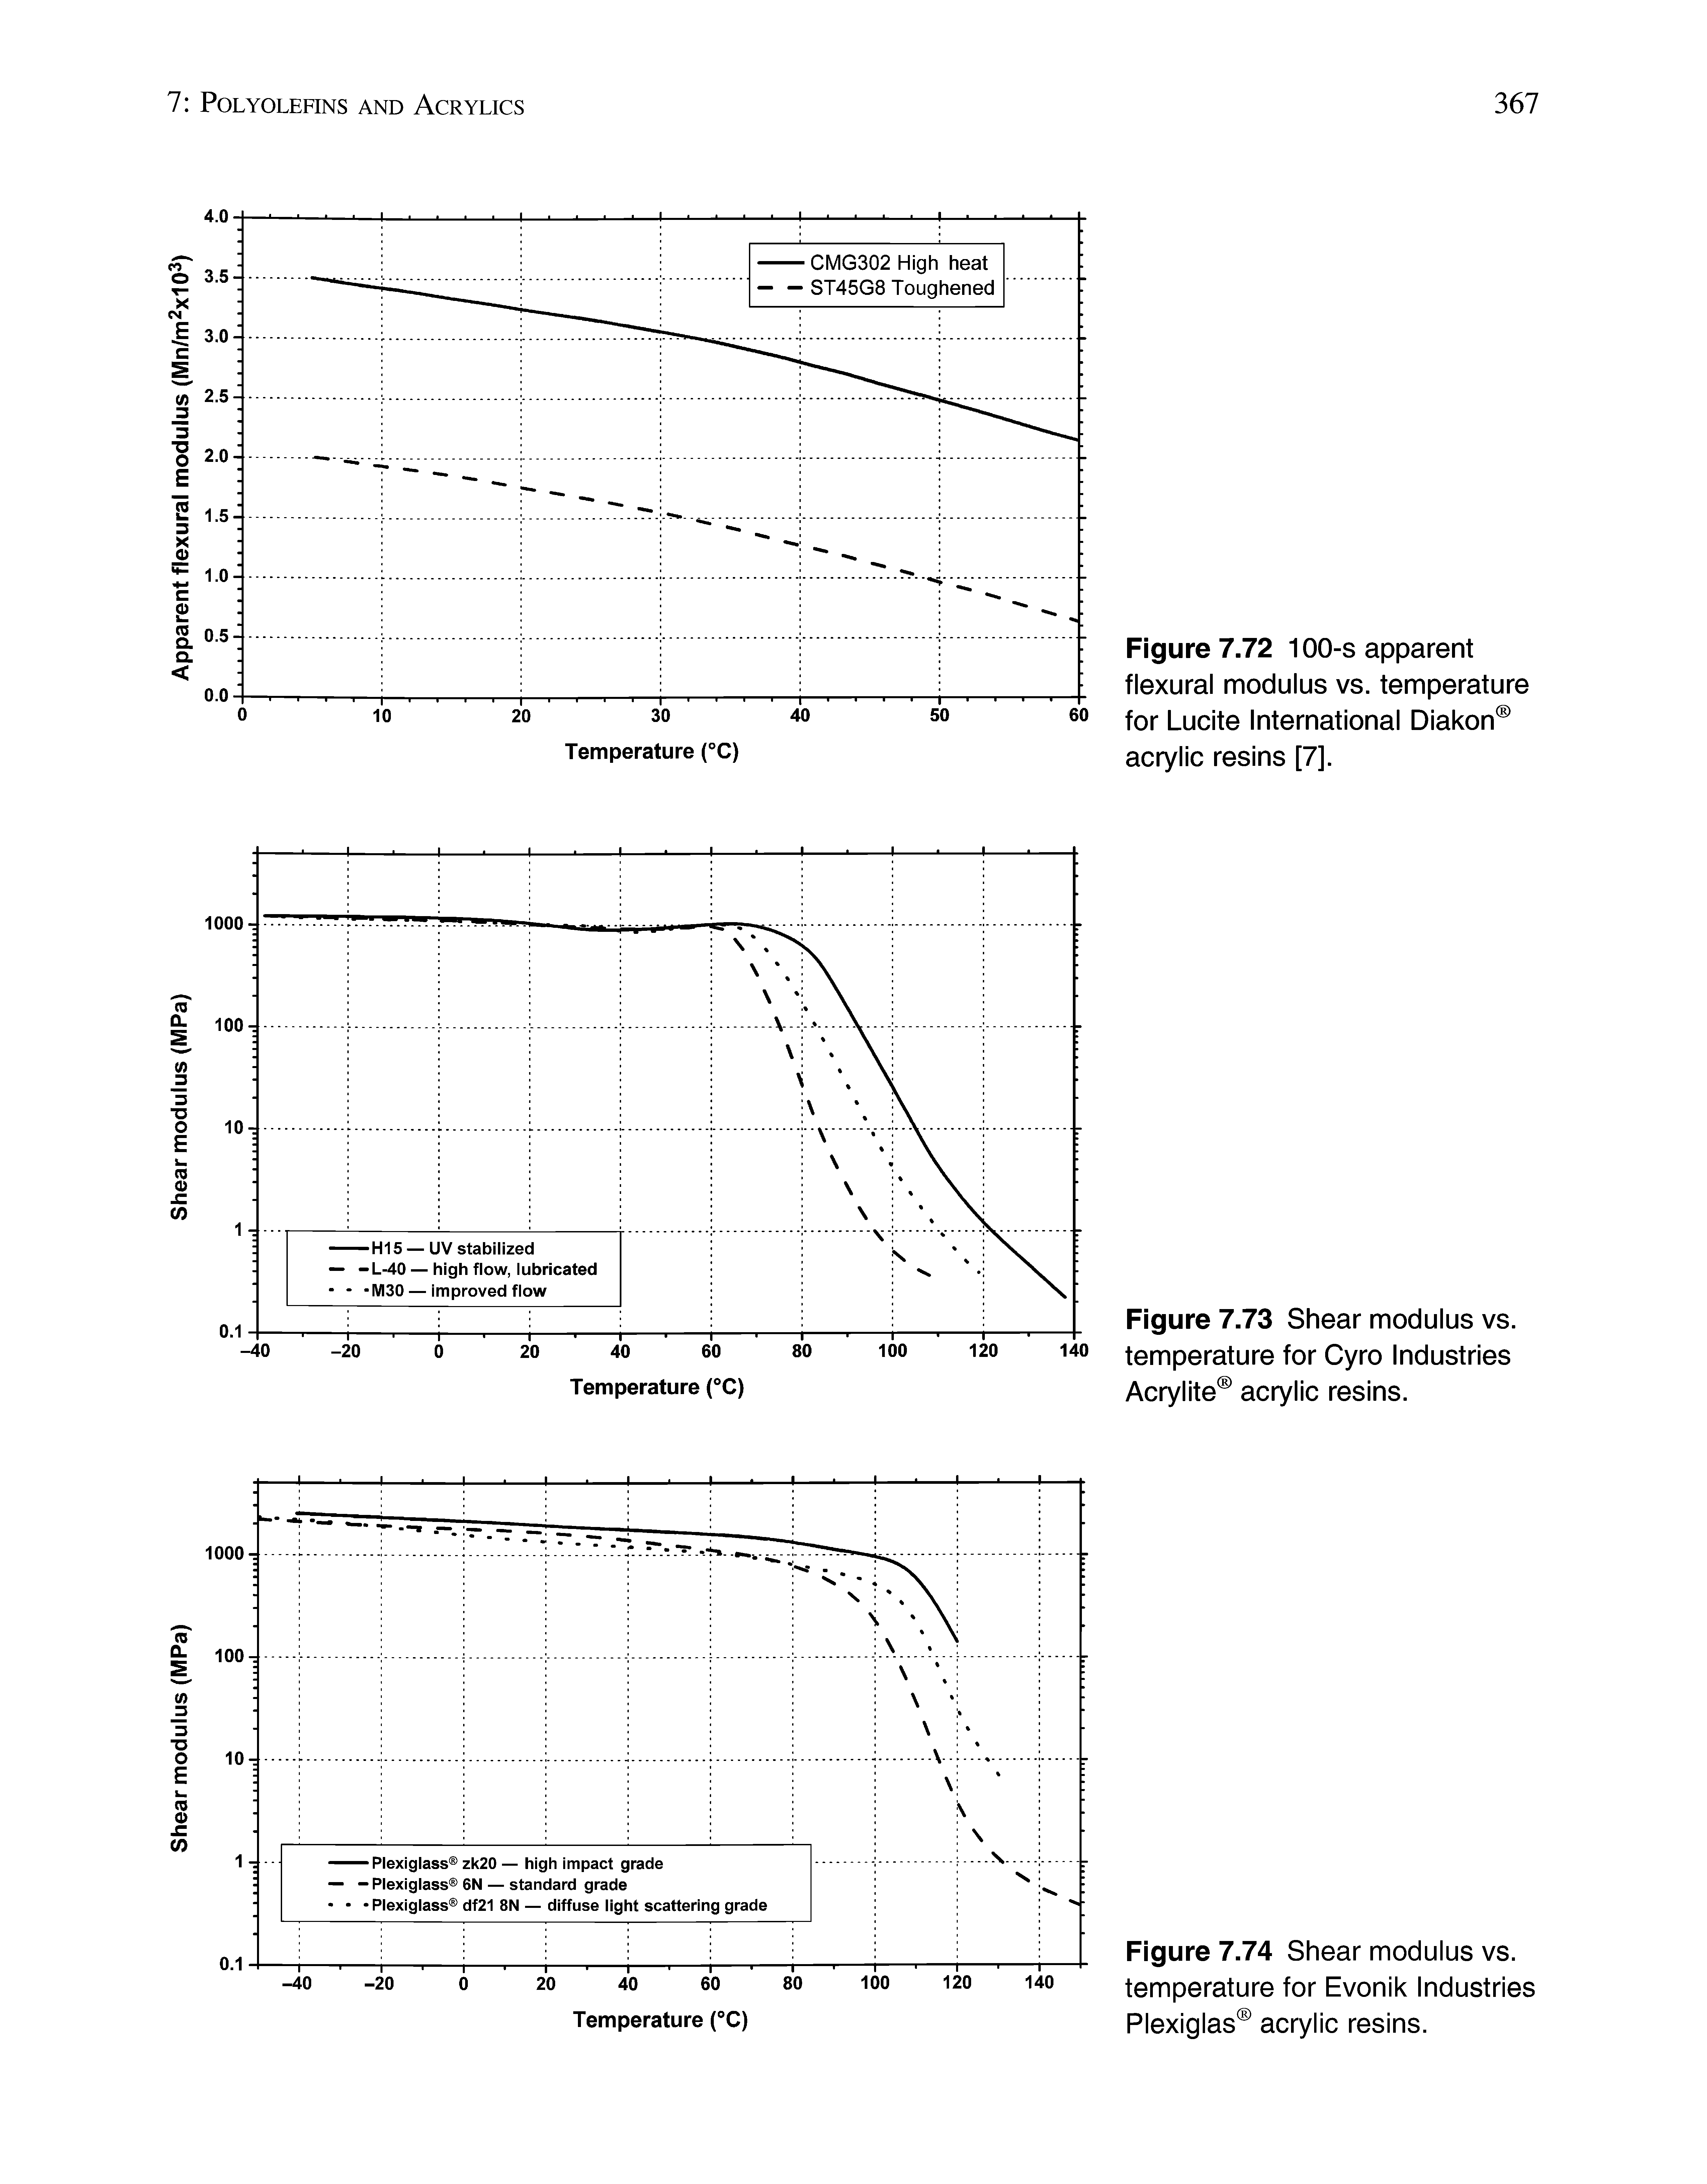 Figure 7.74 Shear modulus vs. temperature for Evonik Industries Plexiglas acrylic resins.